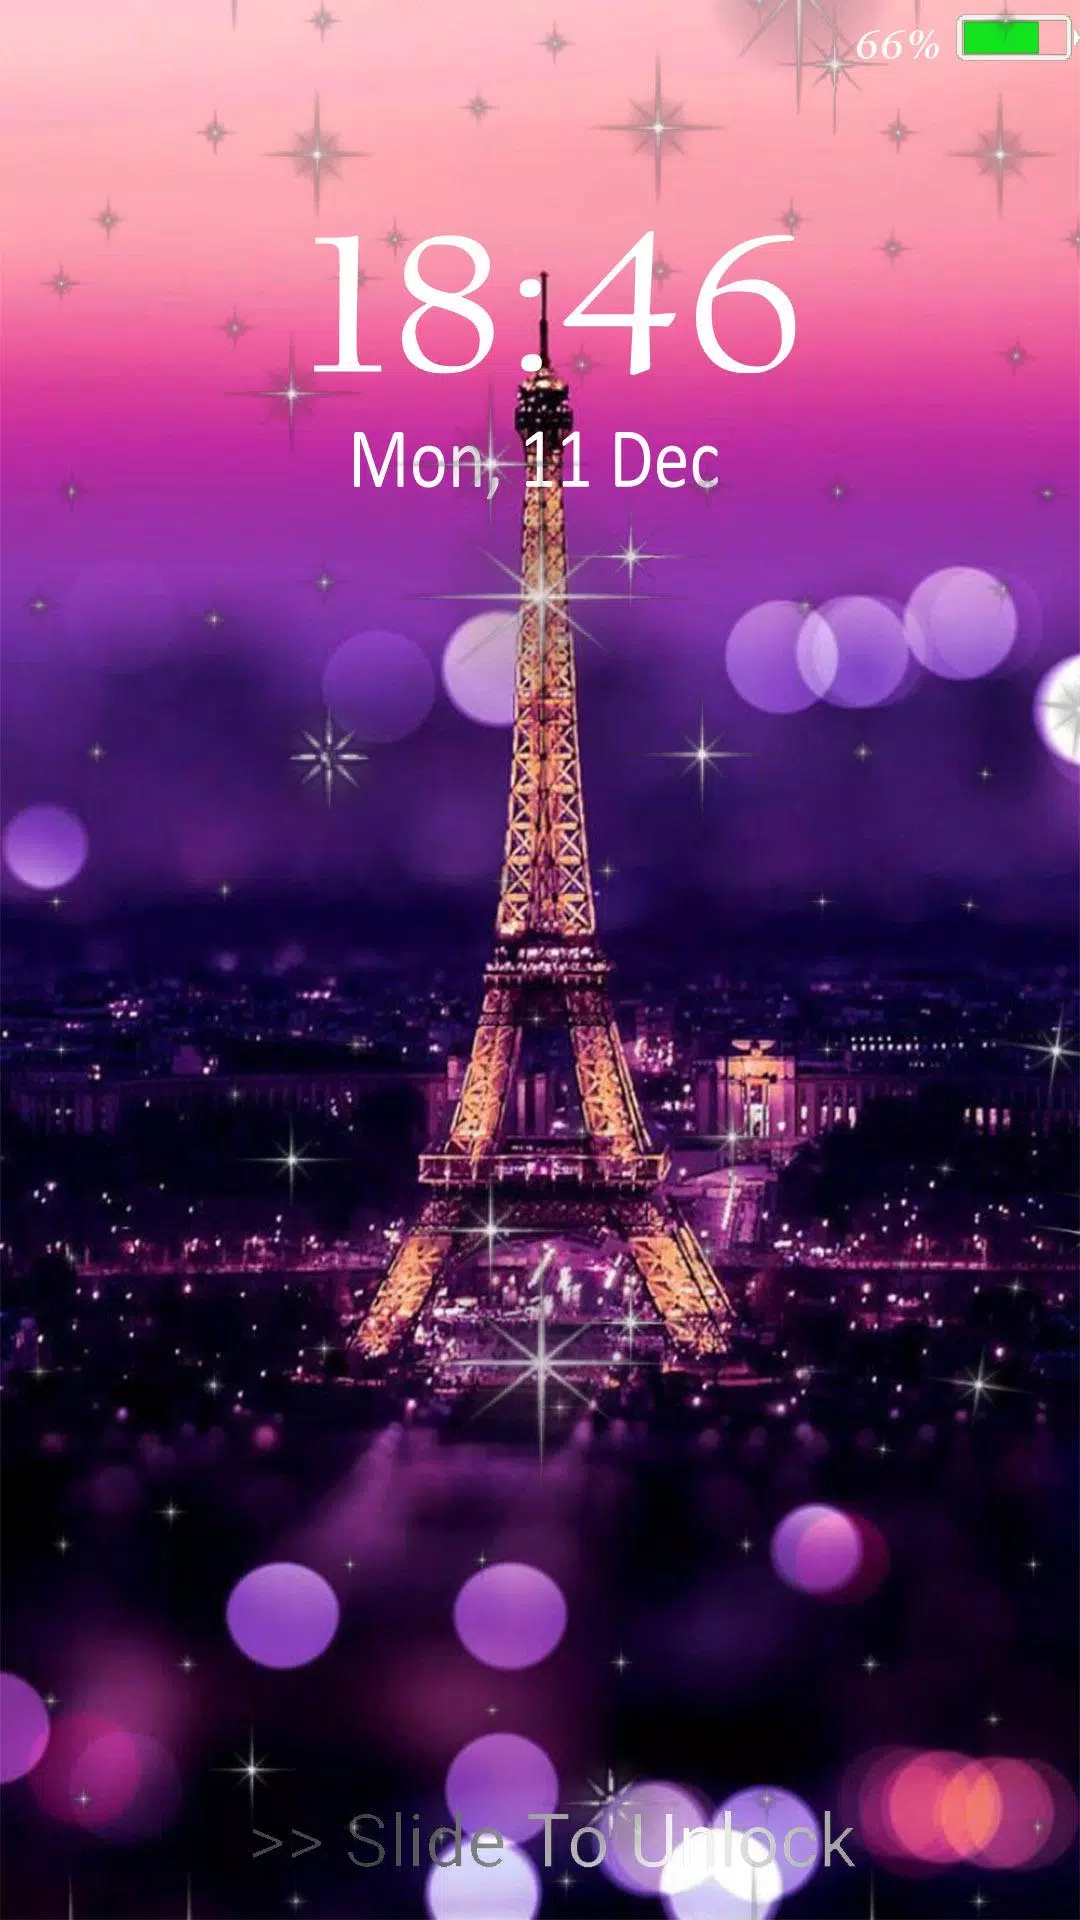 Paris live wallpaper & Lock screen APK for Android Download